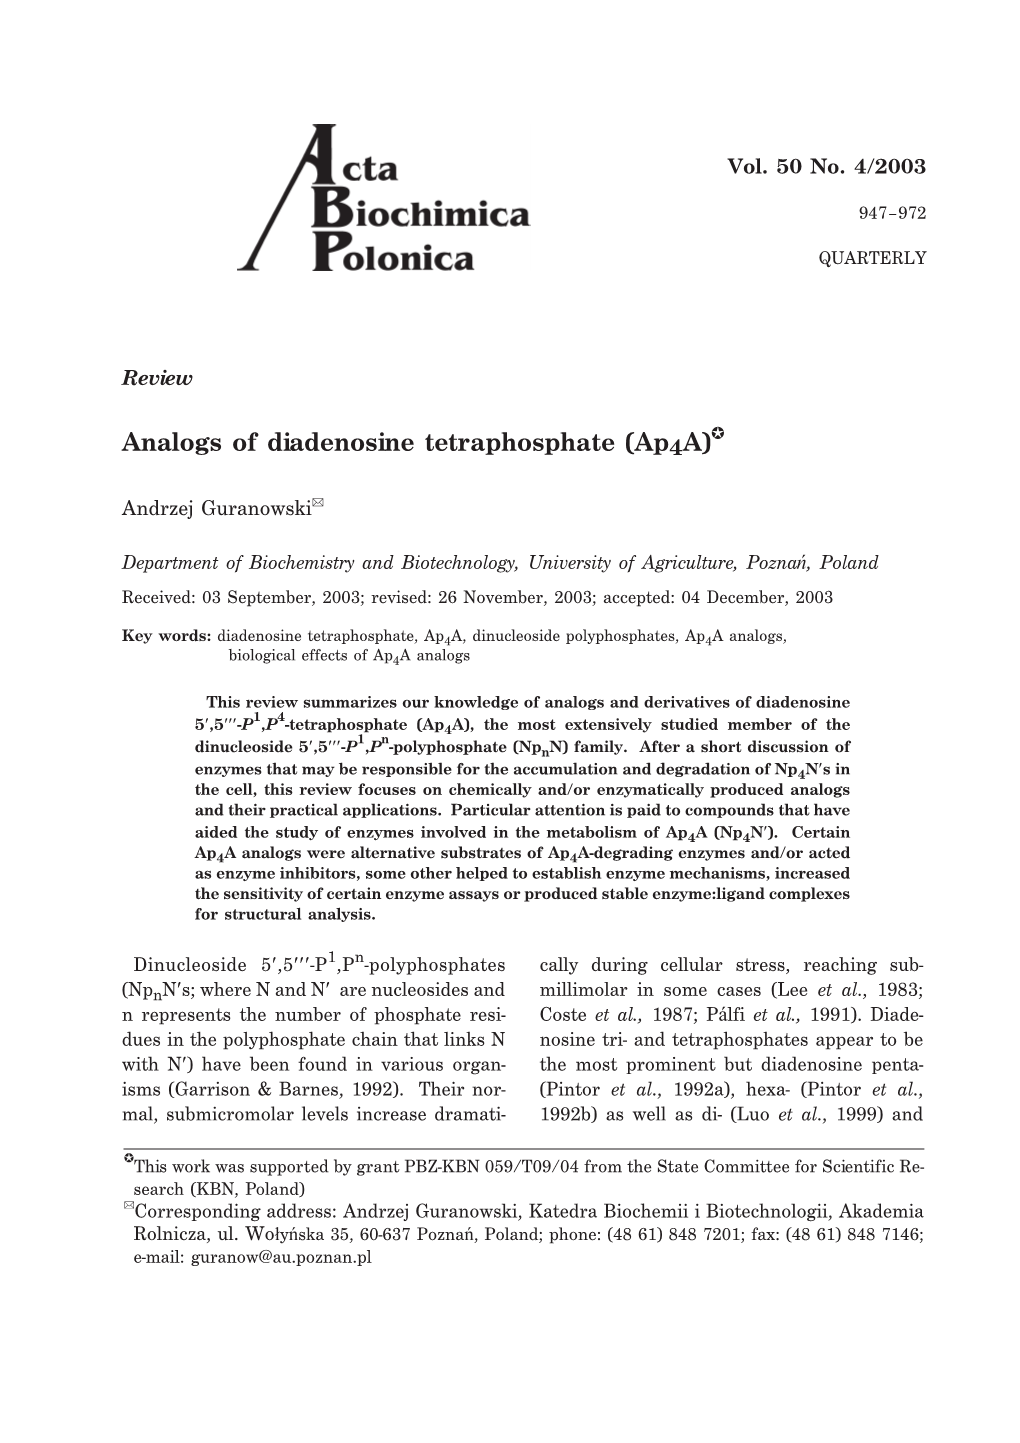 Analogs of Diadenosine Tetraphosphate (Ap4a)